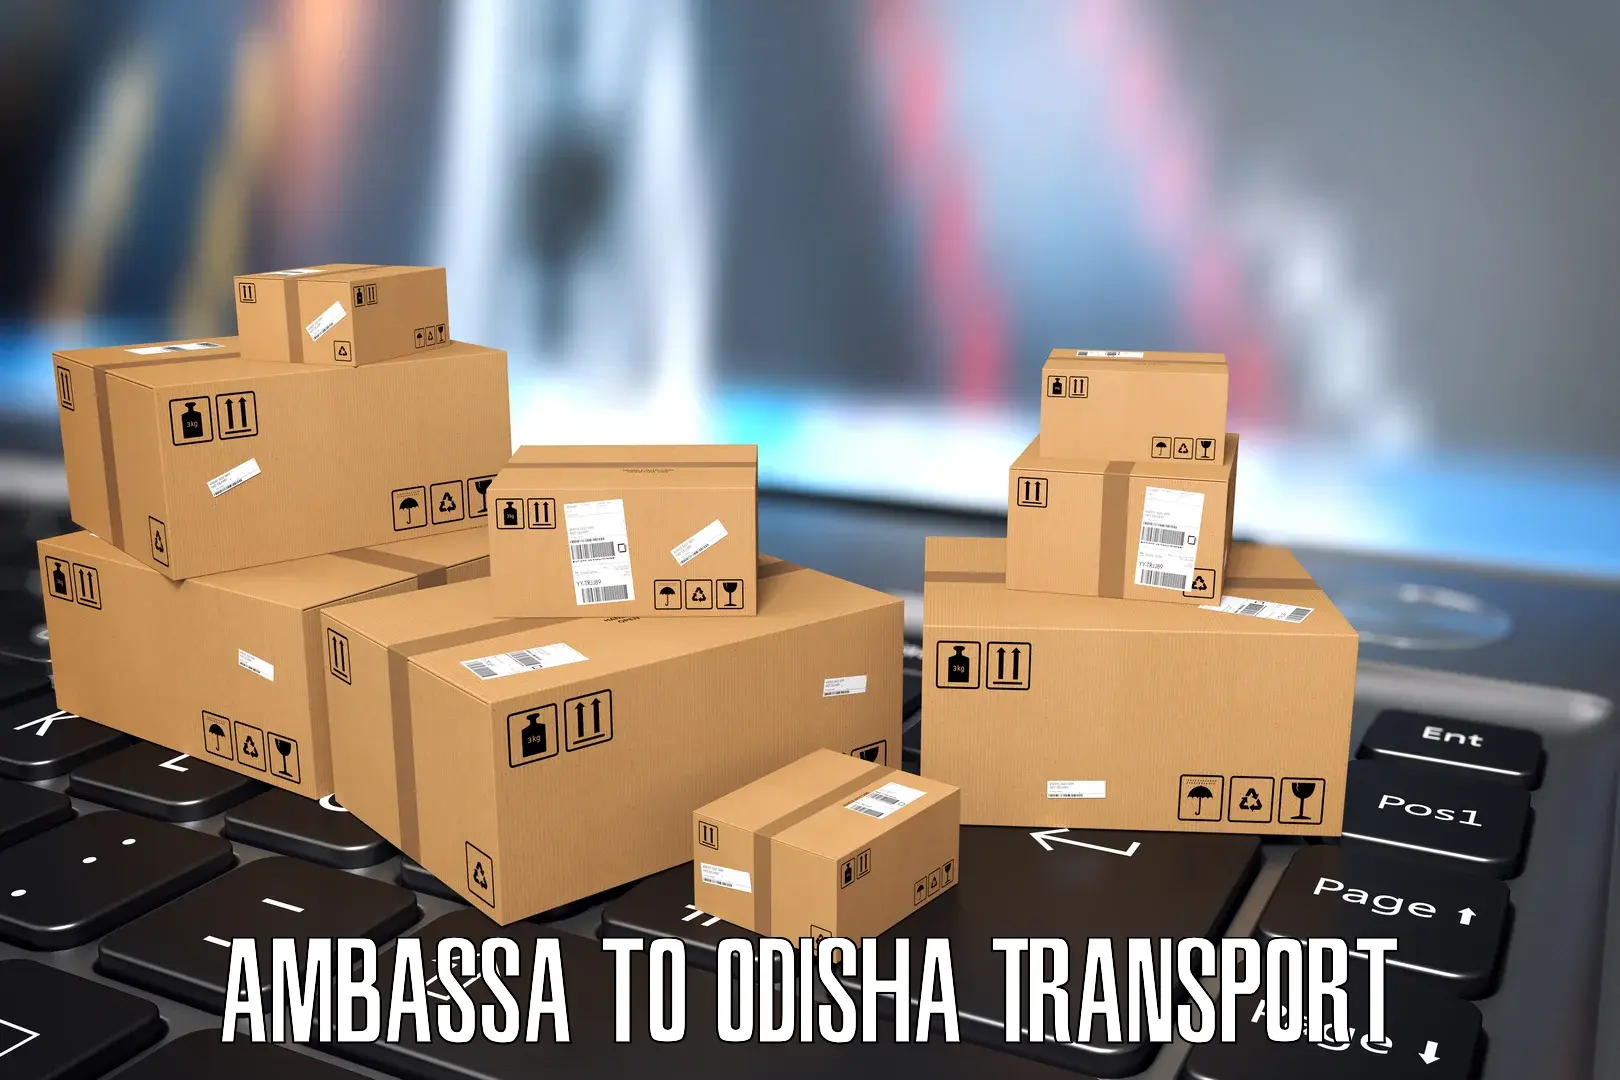 Transport in sharing Ambassa to Morada